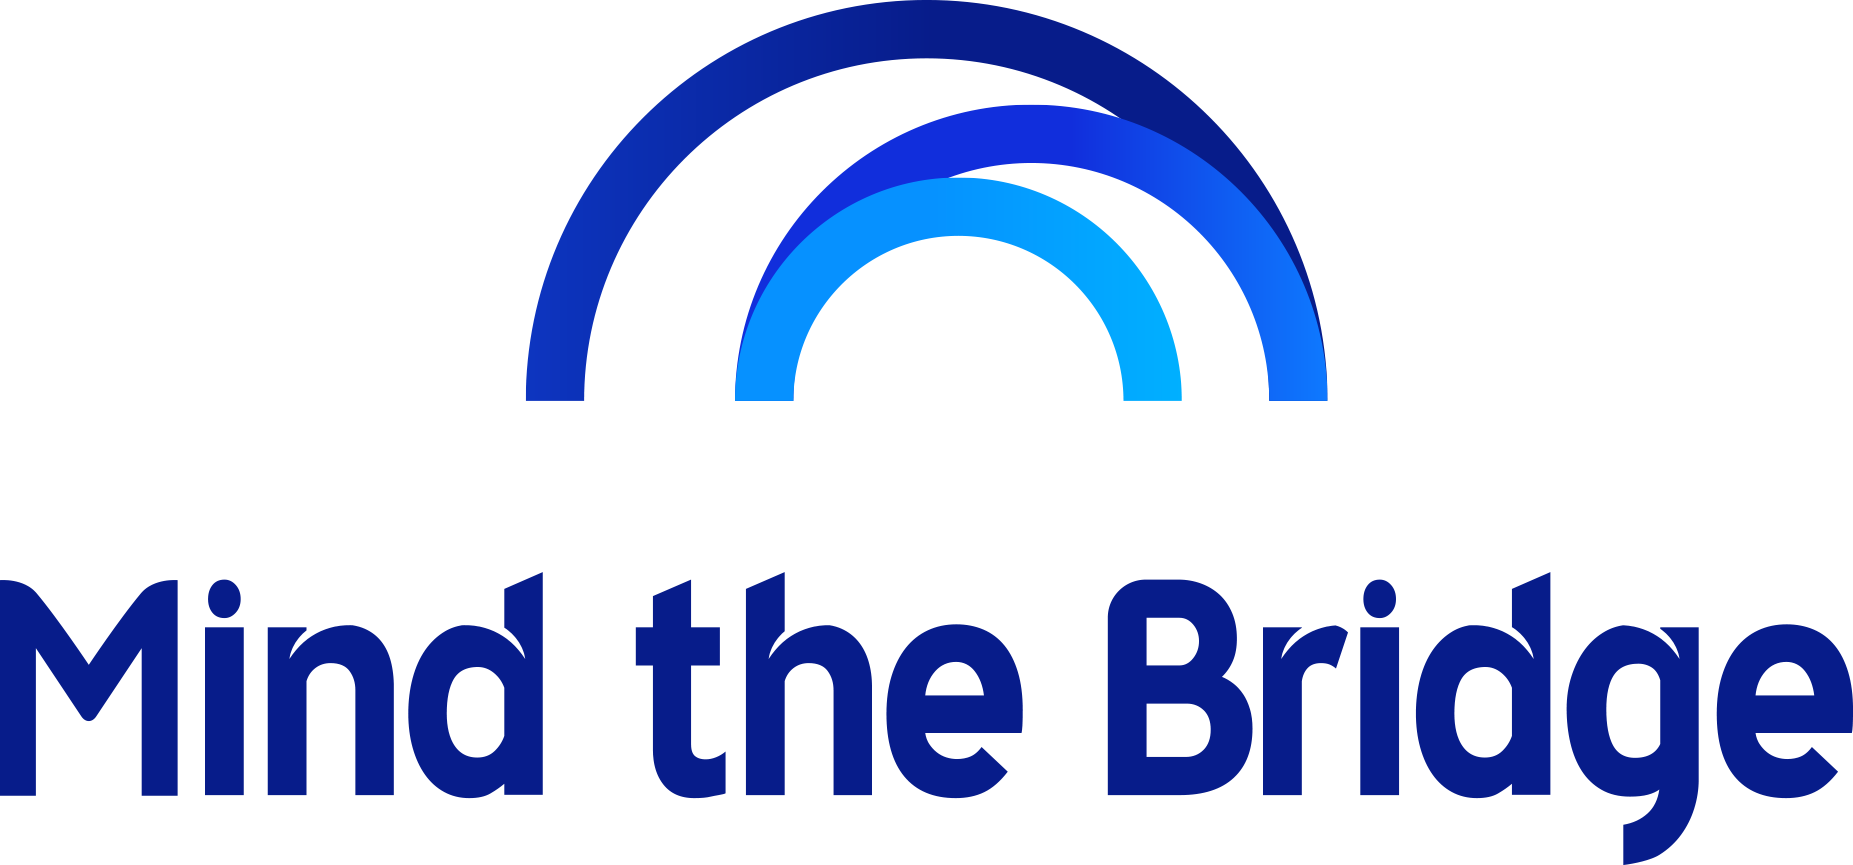 Mind the Bridge's logo